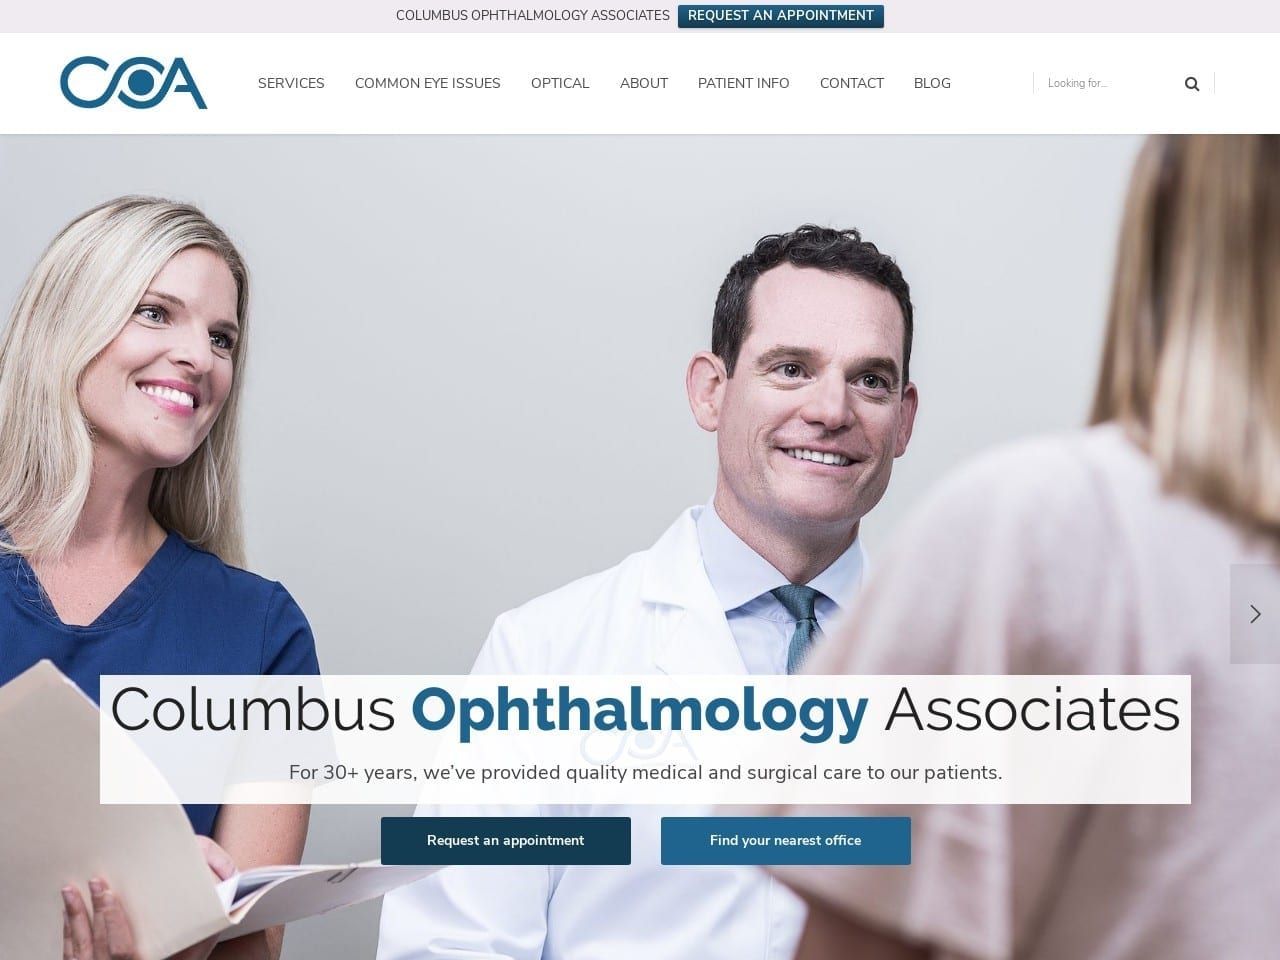 Columbus Ophthalmology Associates Website Screenshot from coavision.com